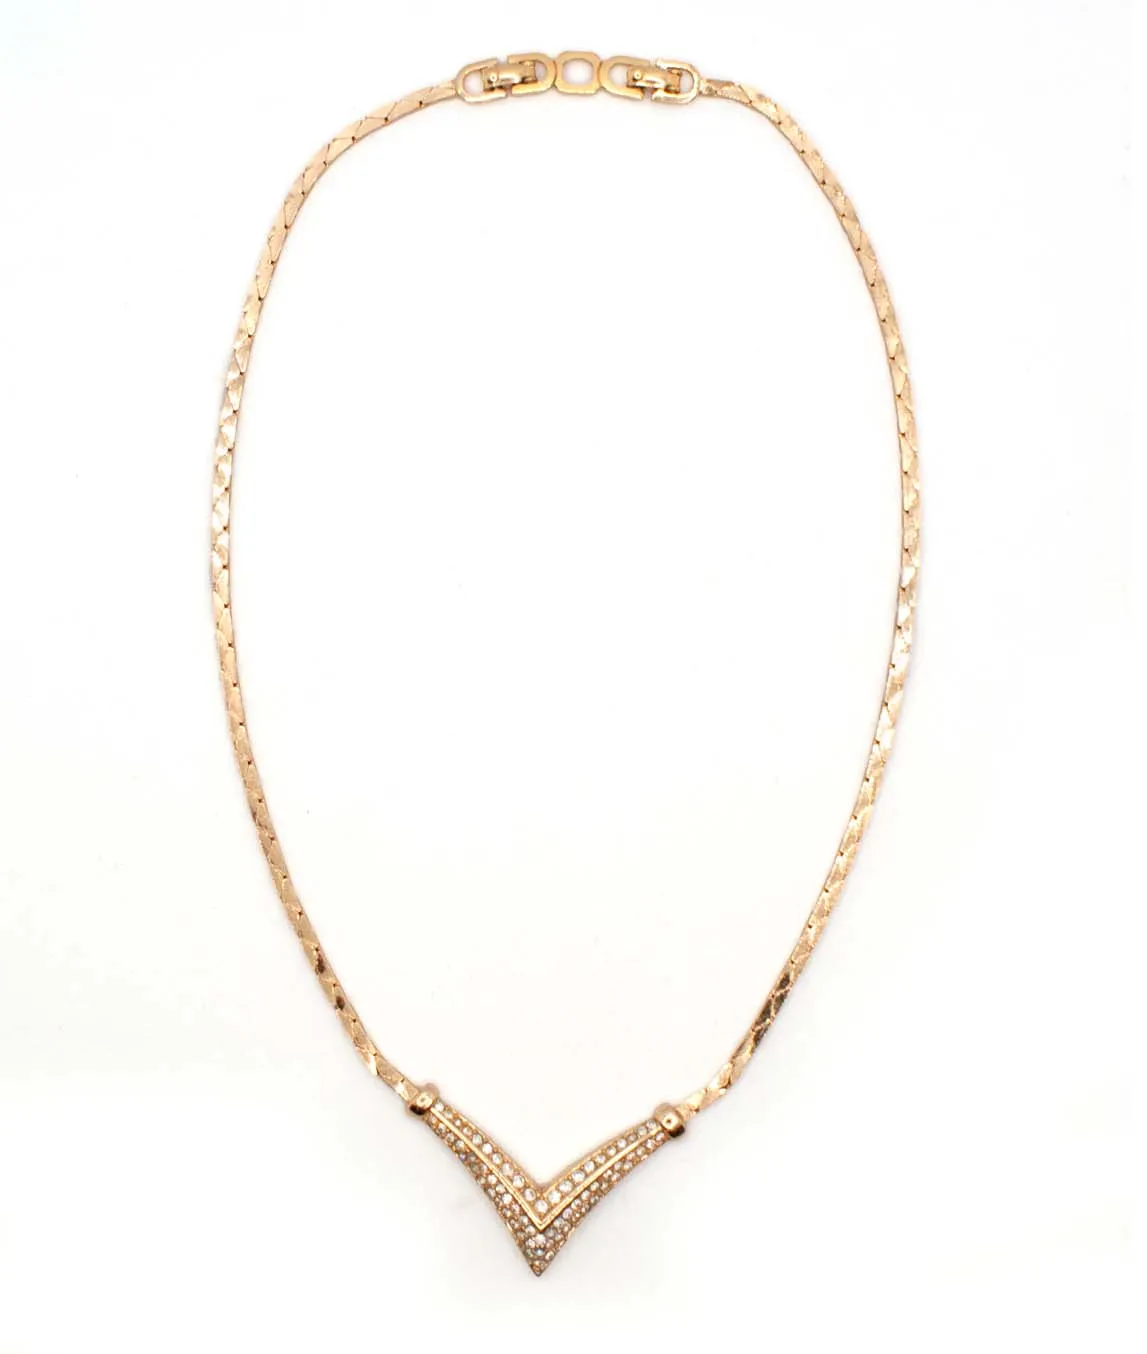 Vintage 1980s Christian Dior gold-tone chain with rhinestone v decoration